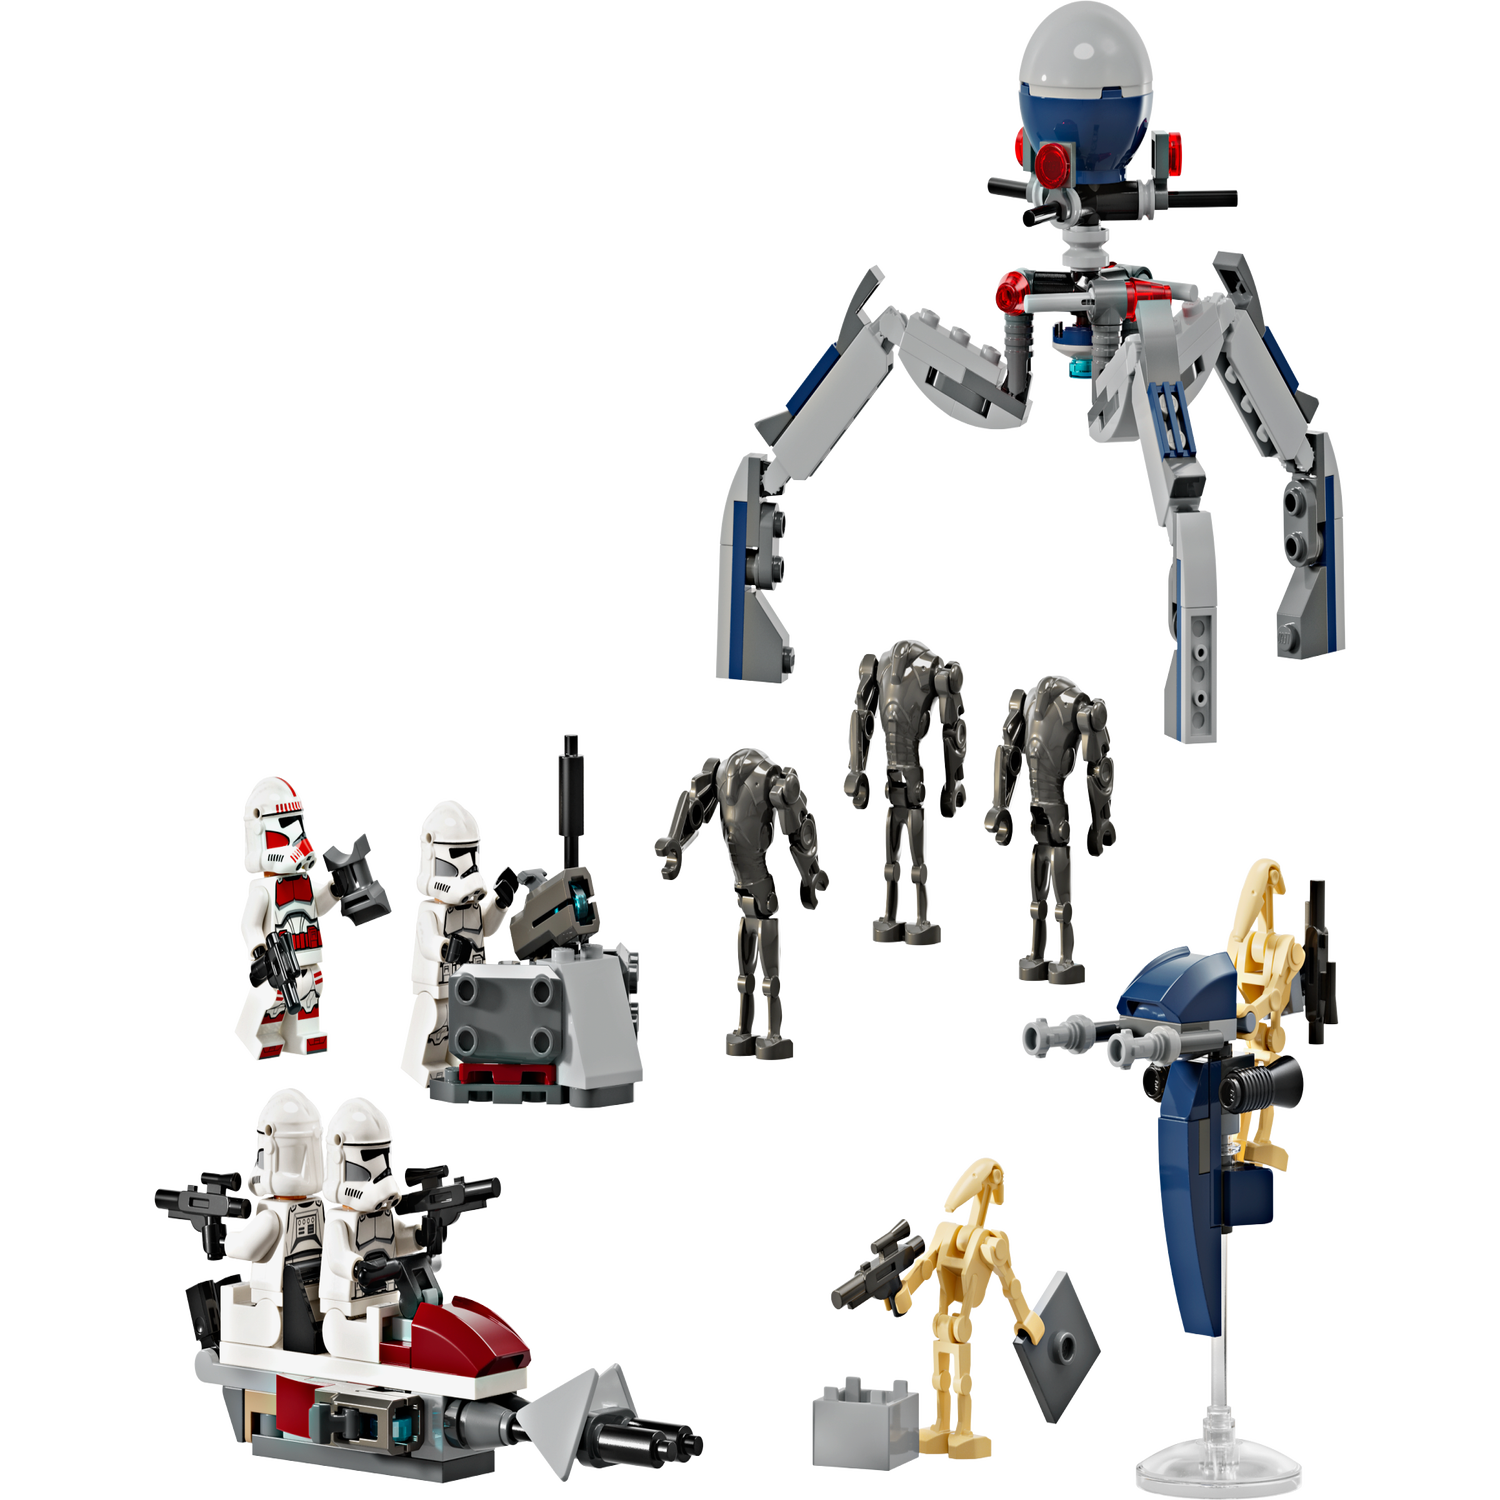 LEGO® Star Wars™ Clone Trooper™ & Battle Droid™ Battle Pack 75372